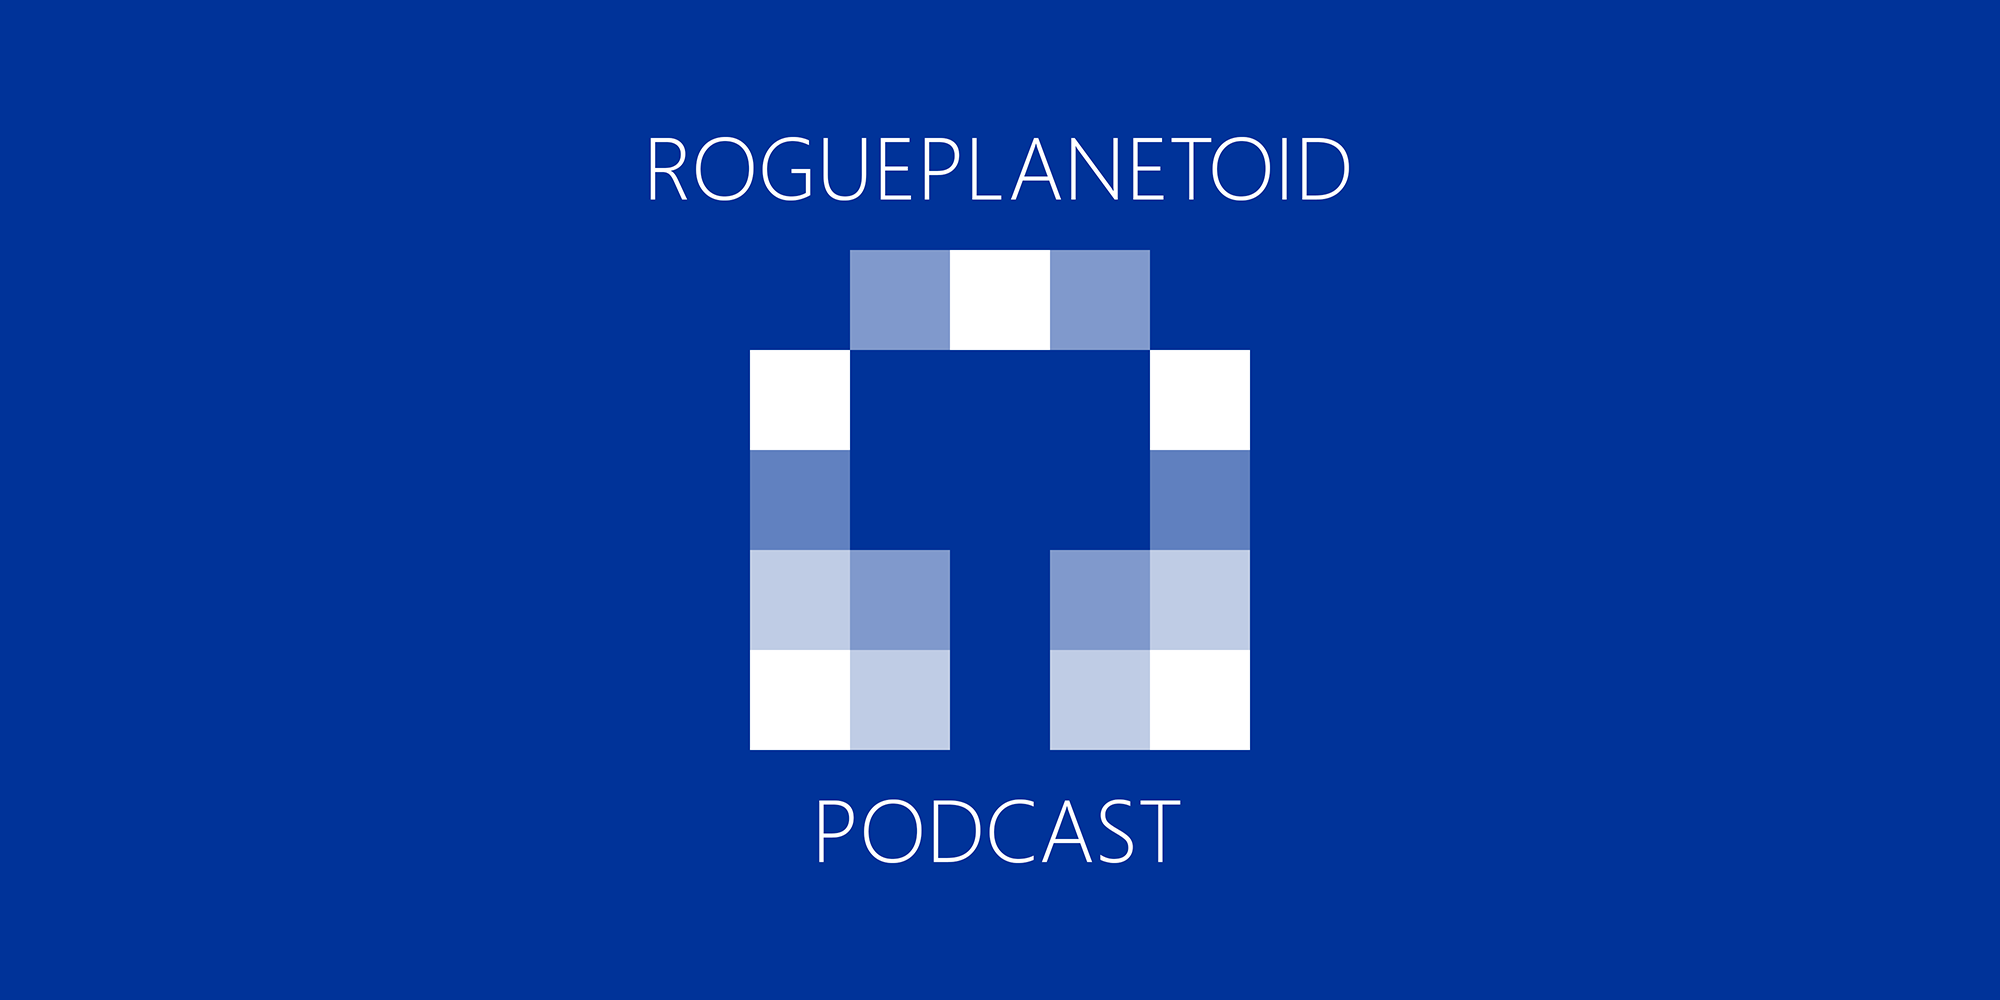 RoguePlanetoid Podcast - Episode Thirteen - C#